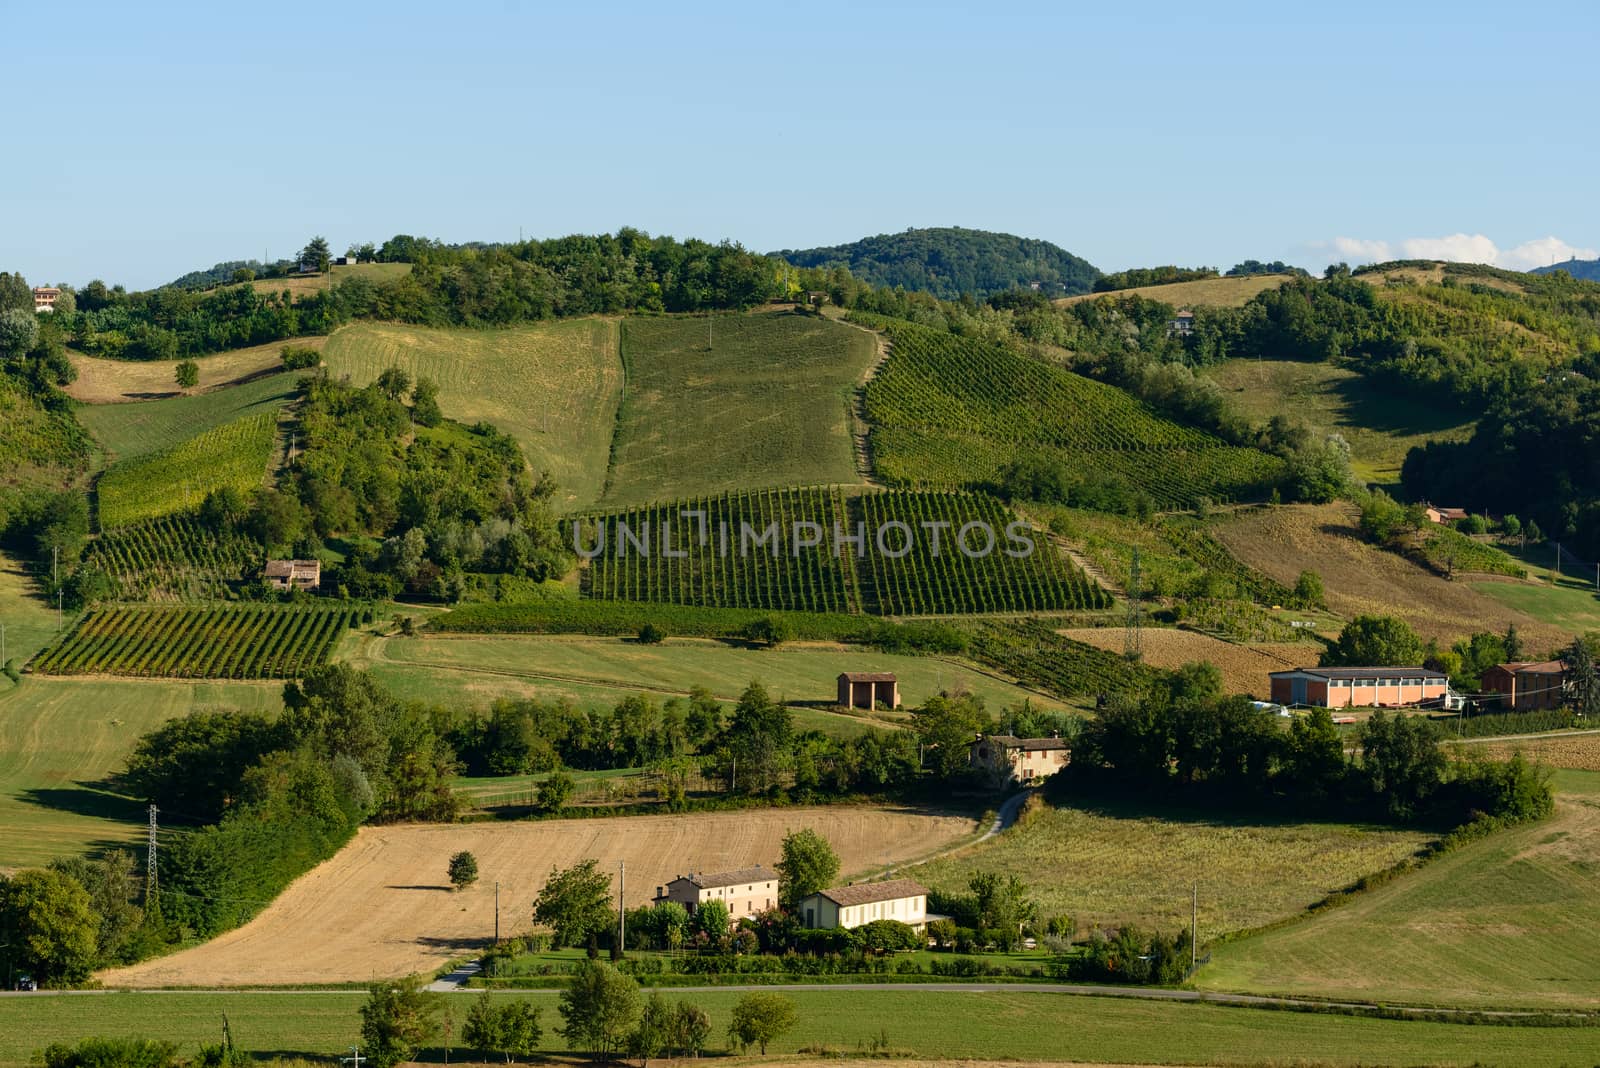 Castell'Arquato vineyards view by Robertobinetti70